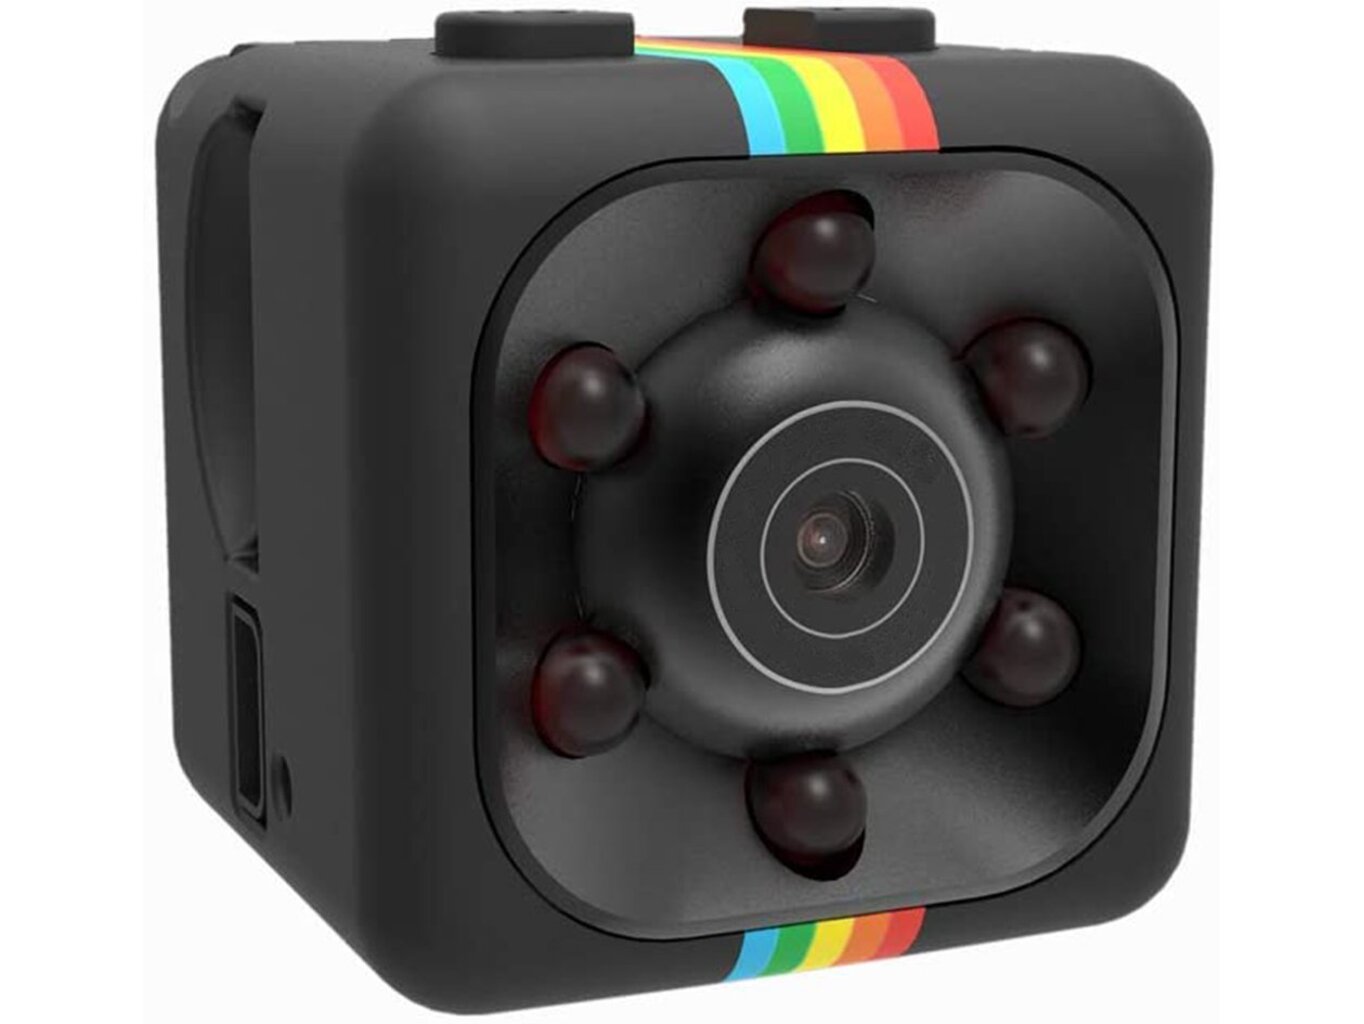 Bezdrátová kamera s nočním režimem - SQ11 Mini DV